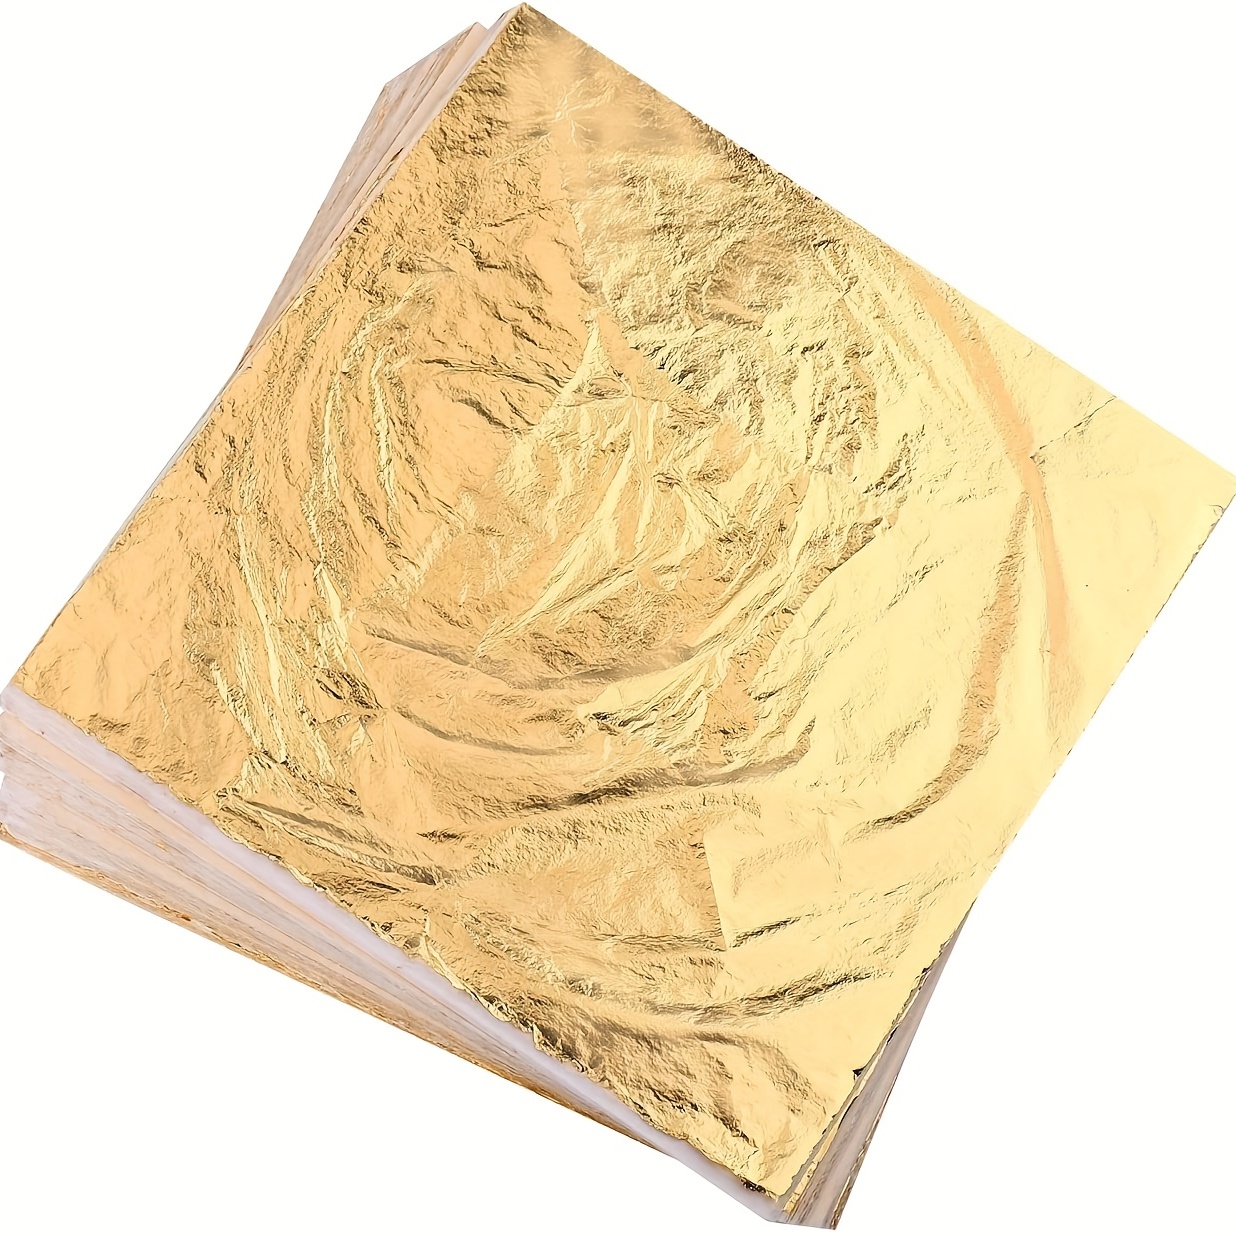 2 Bottles Edible Gold Leaf, Edible Gold Flakes for Cake Decorating Gold  Leaf Flakes, 10g Gold Foil Flakes for Cake, Dessert, Nail Art